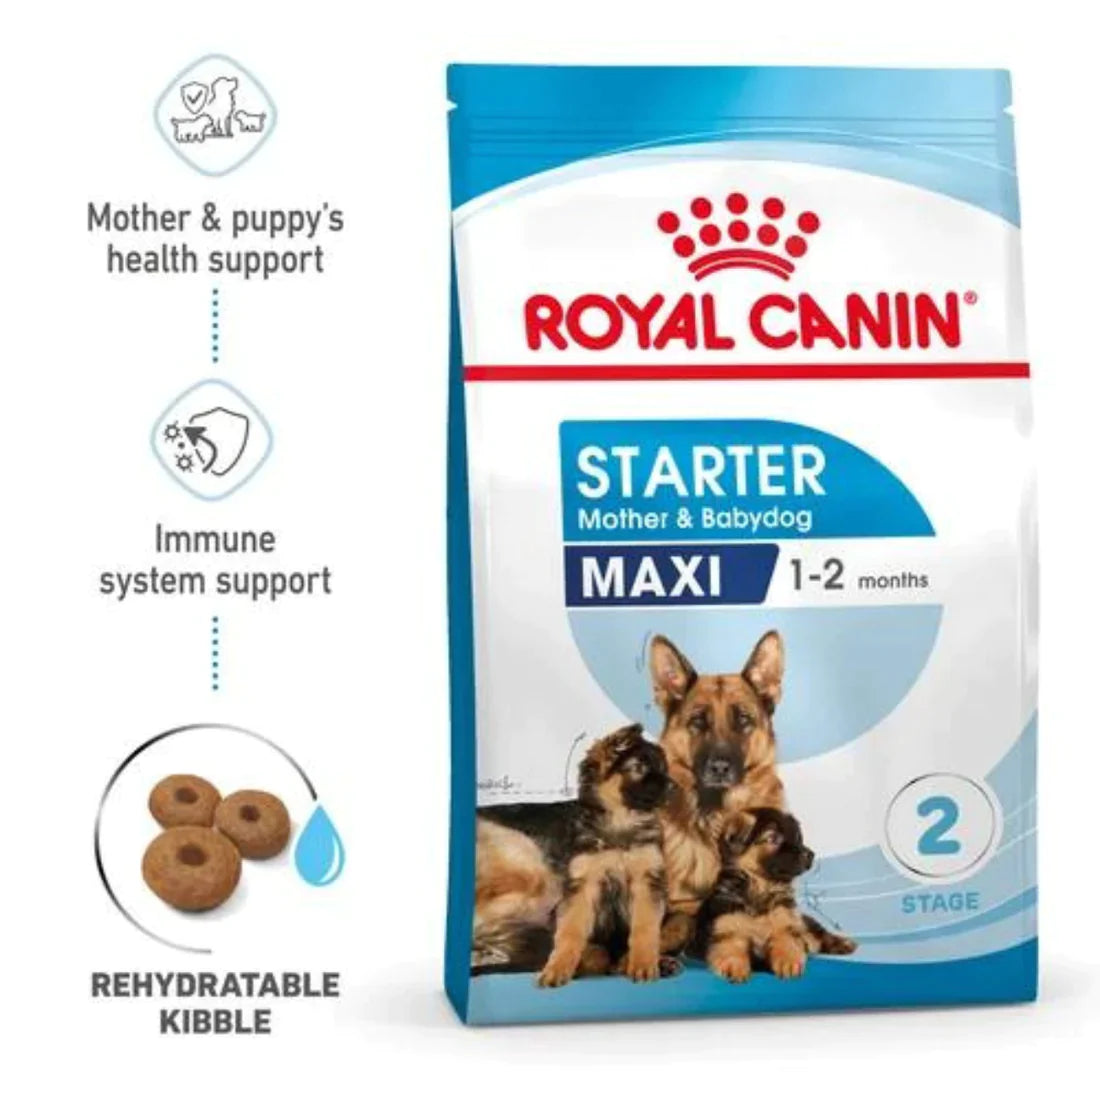 Royal Canin Starter Maxi Dog Food 15kg